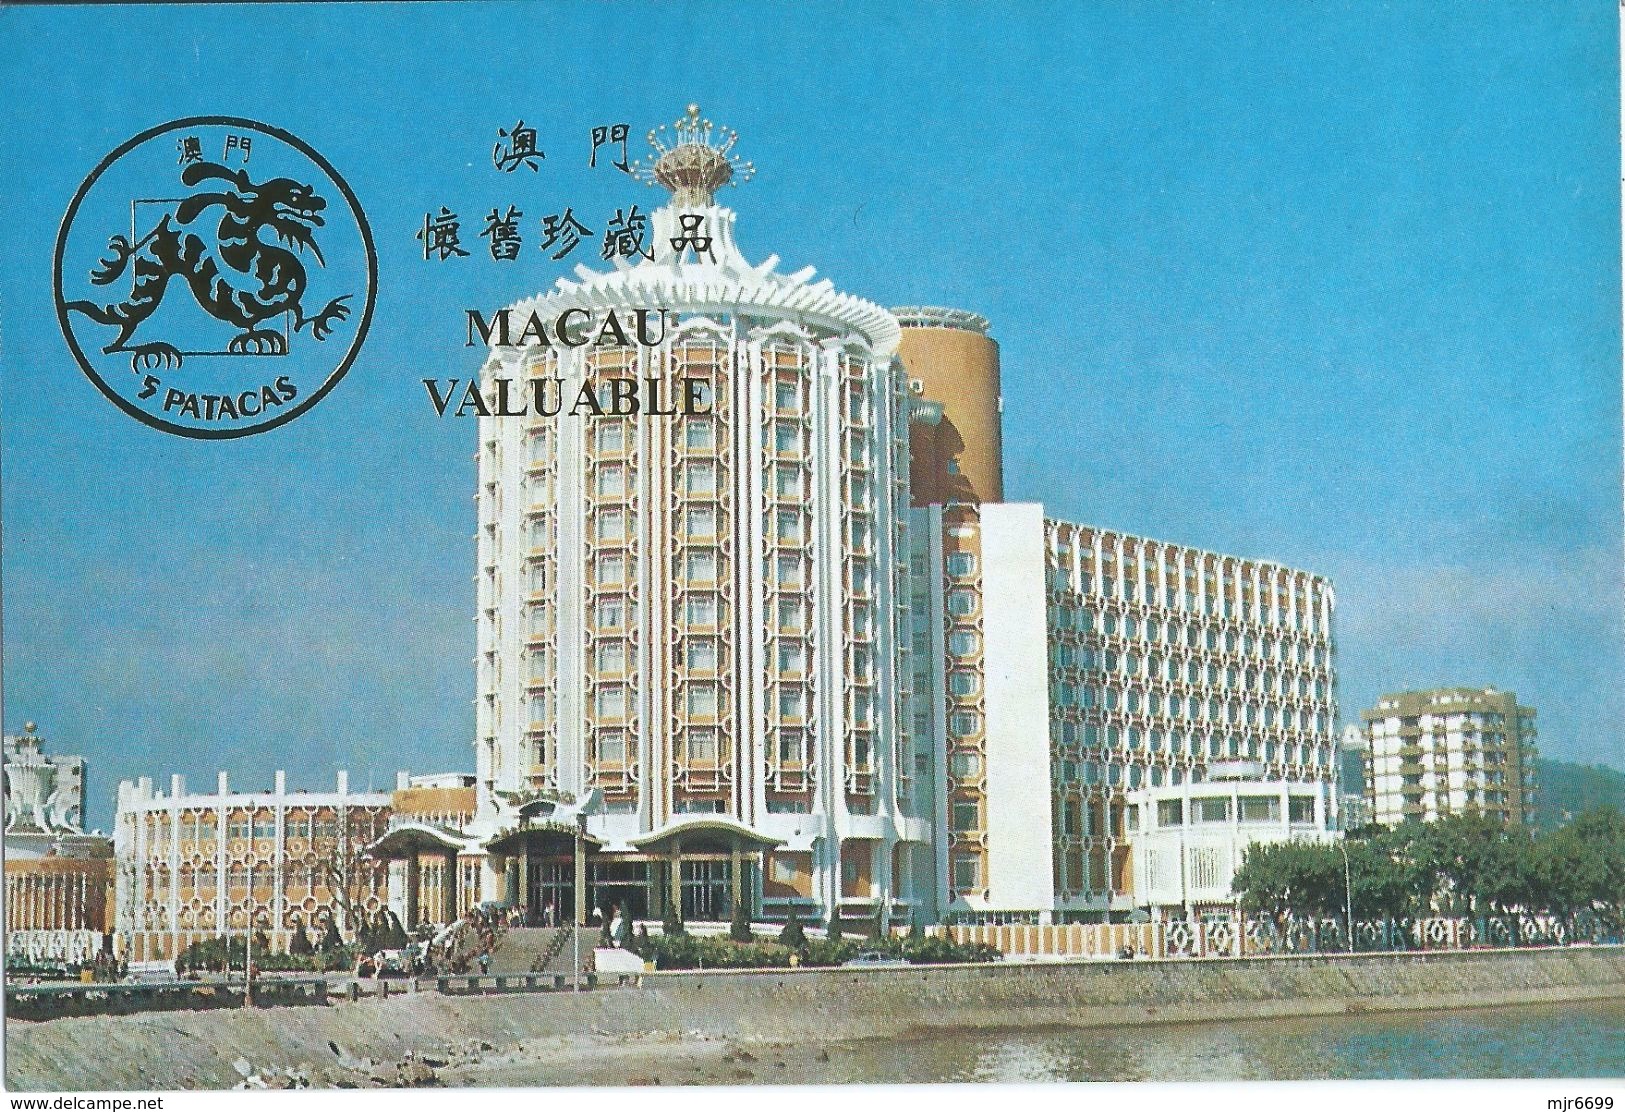 MACAU-THE HOTEL/CASINO LISBOA #7 (WITH JAPANESE DESCRIPTION) - Macao